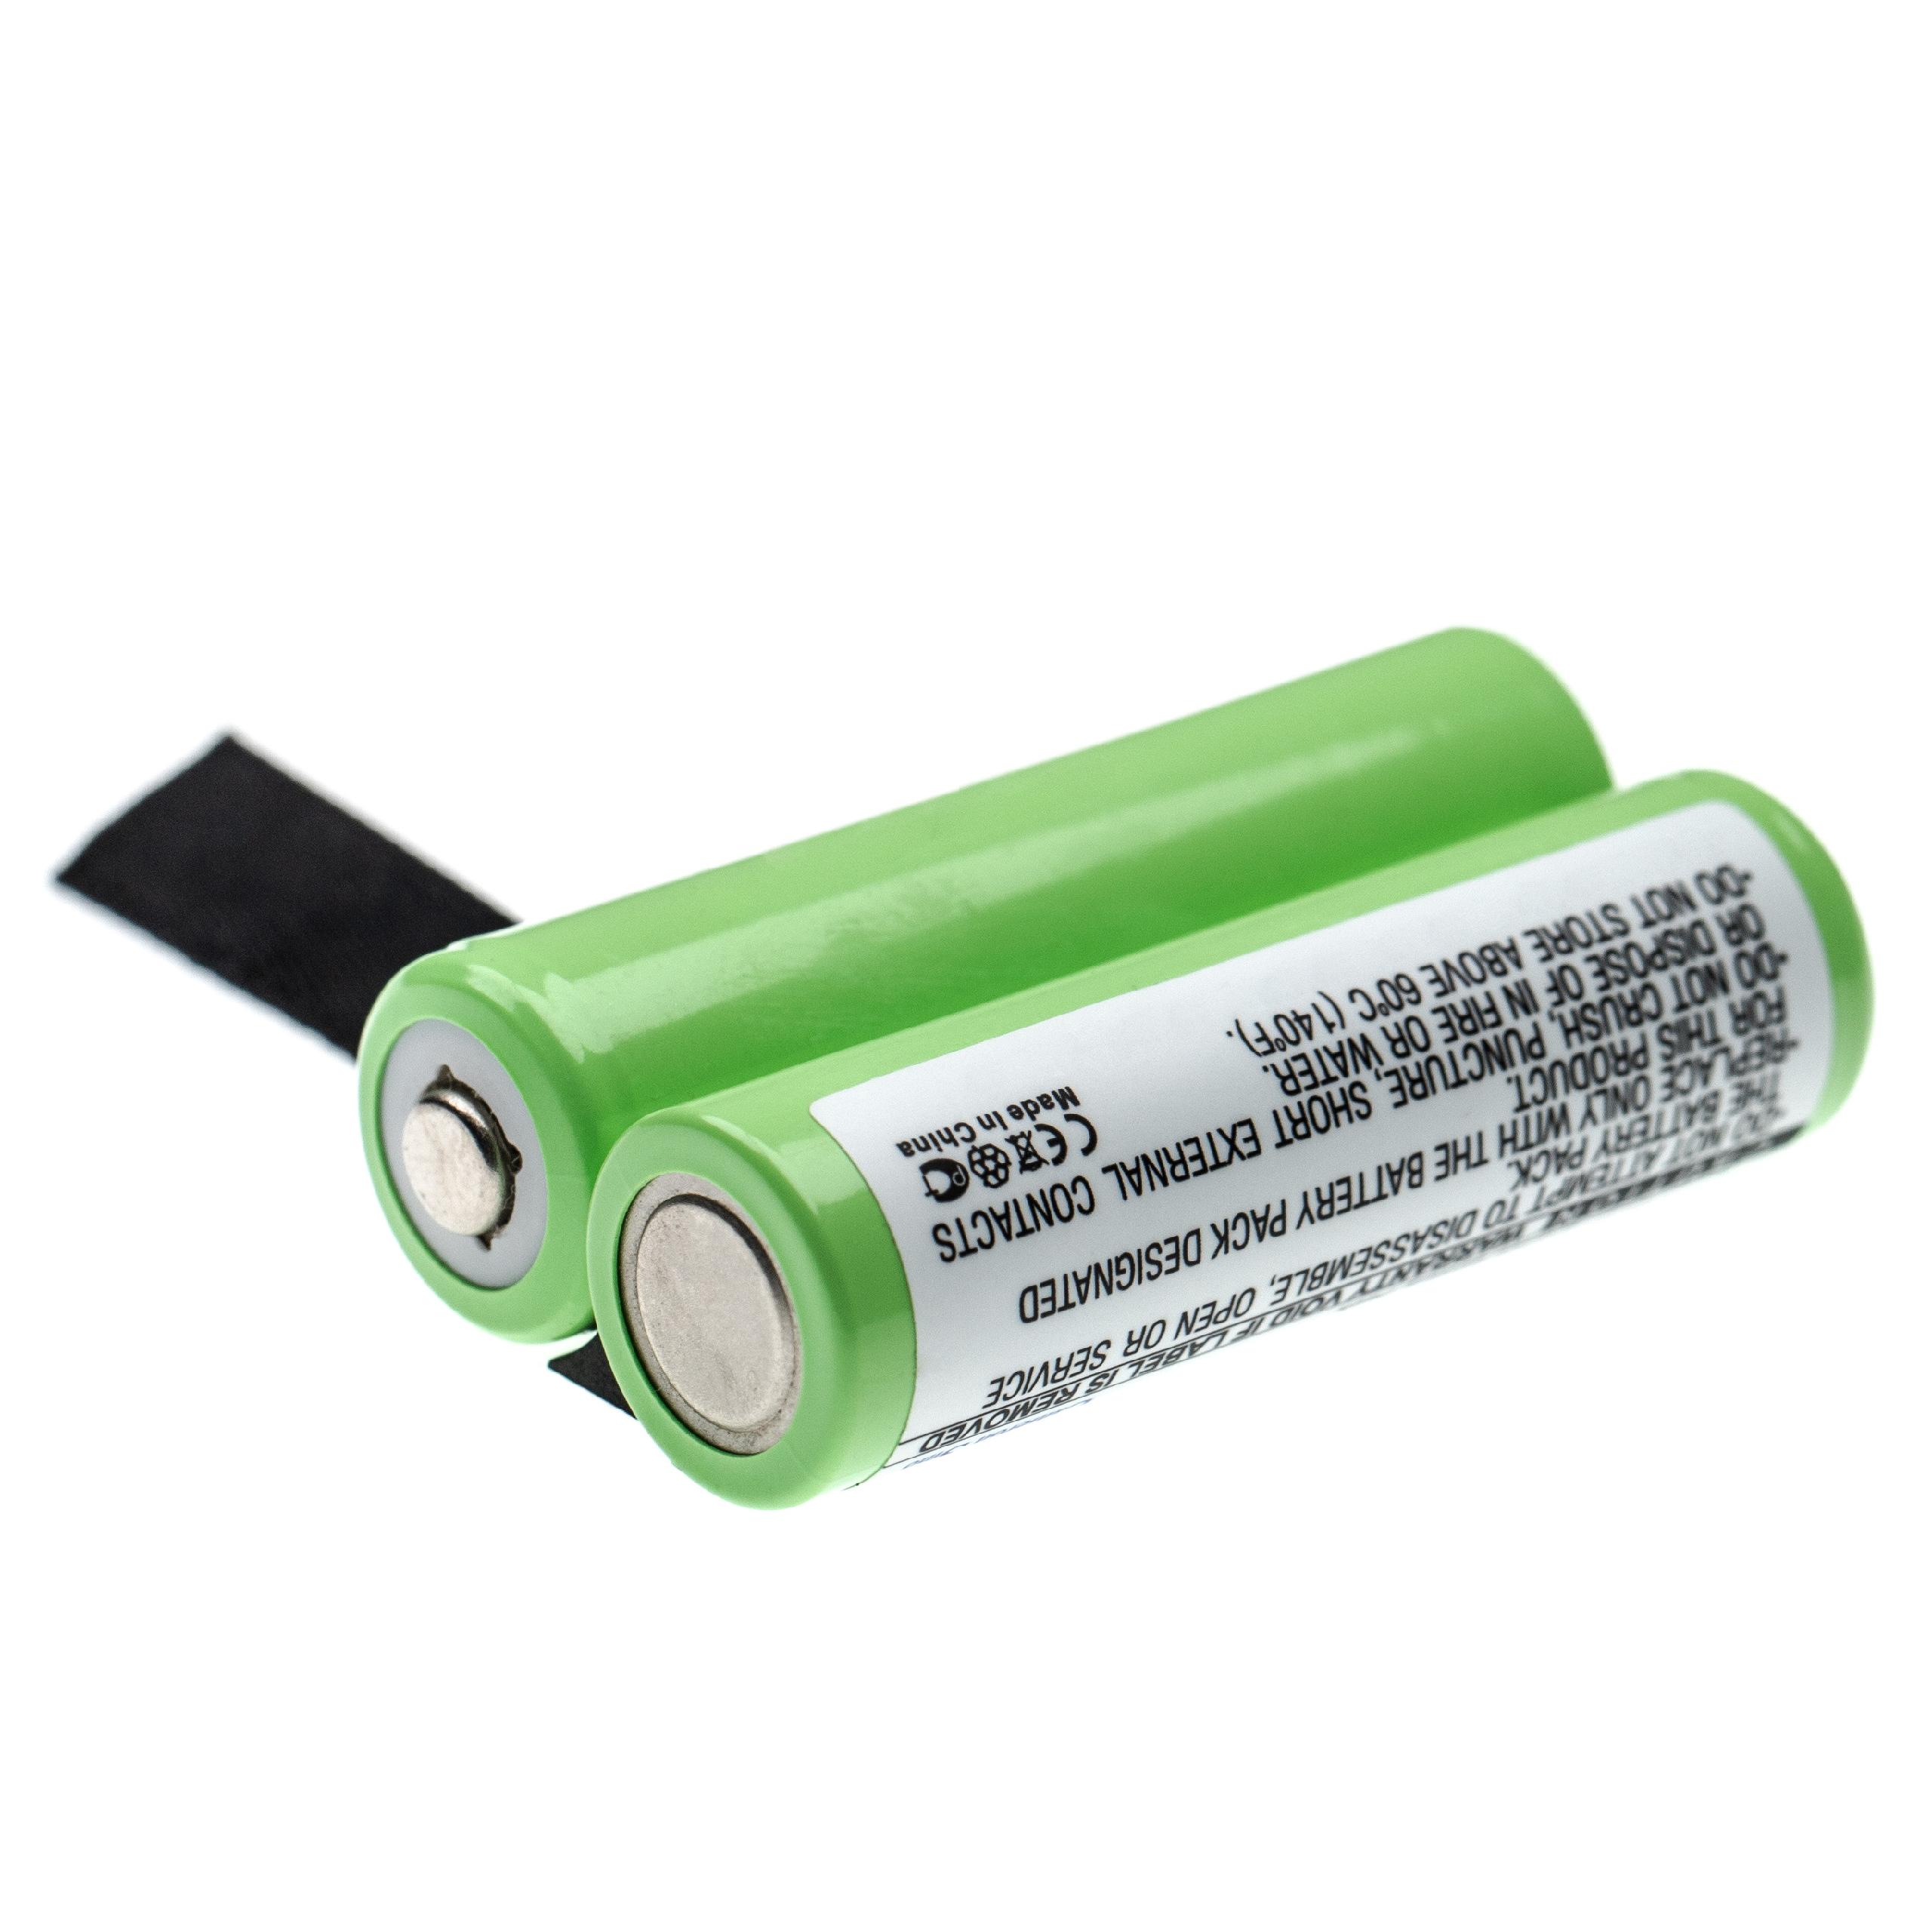 Batteria per radiocomando industriale sostituisce Demag 773-499-44 Demag - 2000mAh 2,4V NiMH